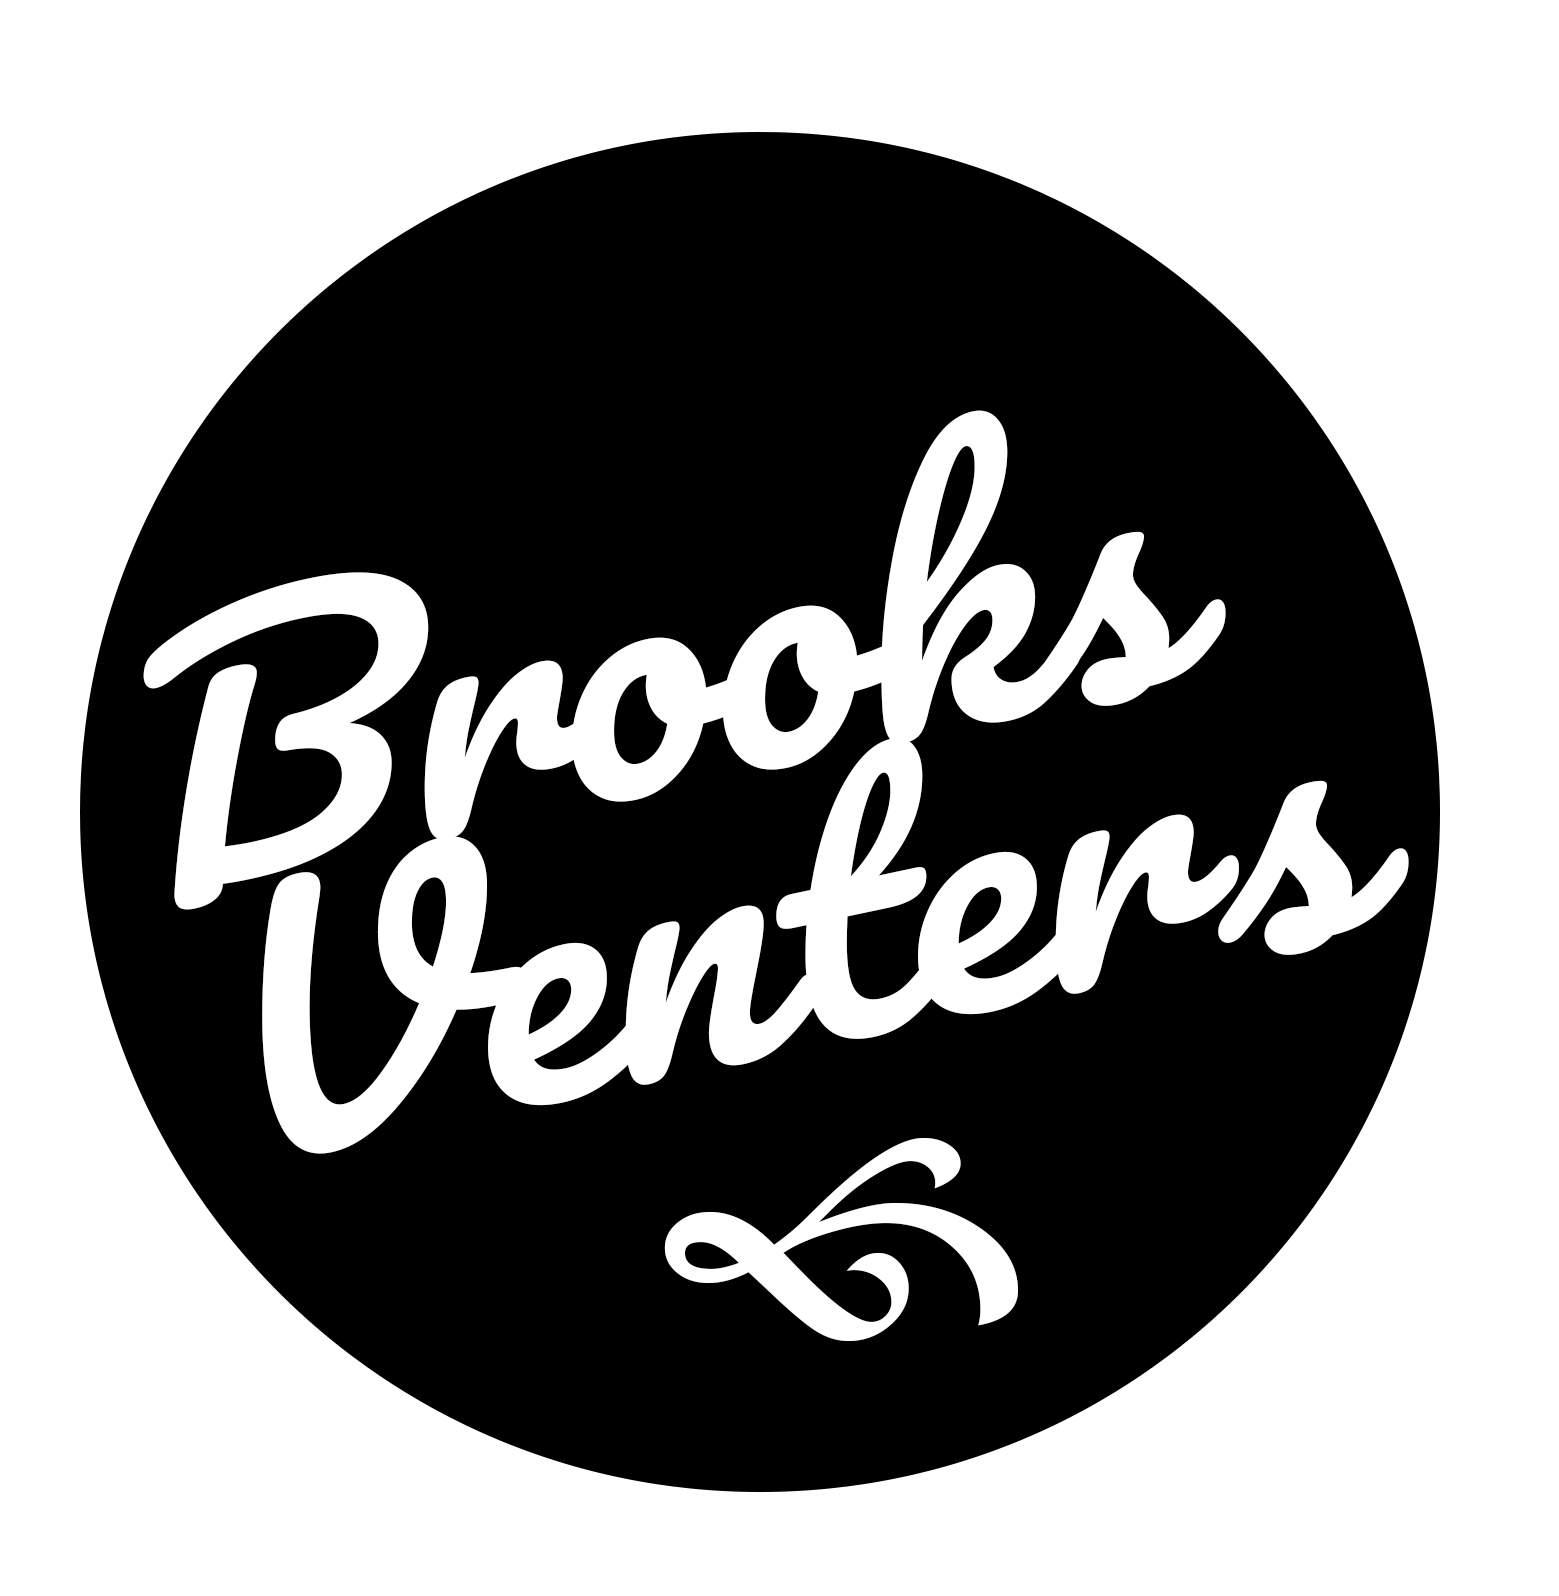 Brooks Venters